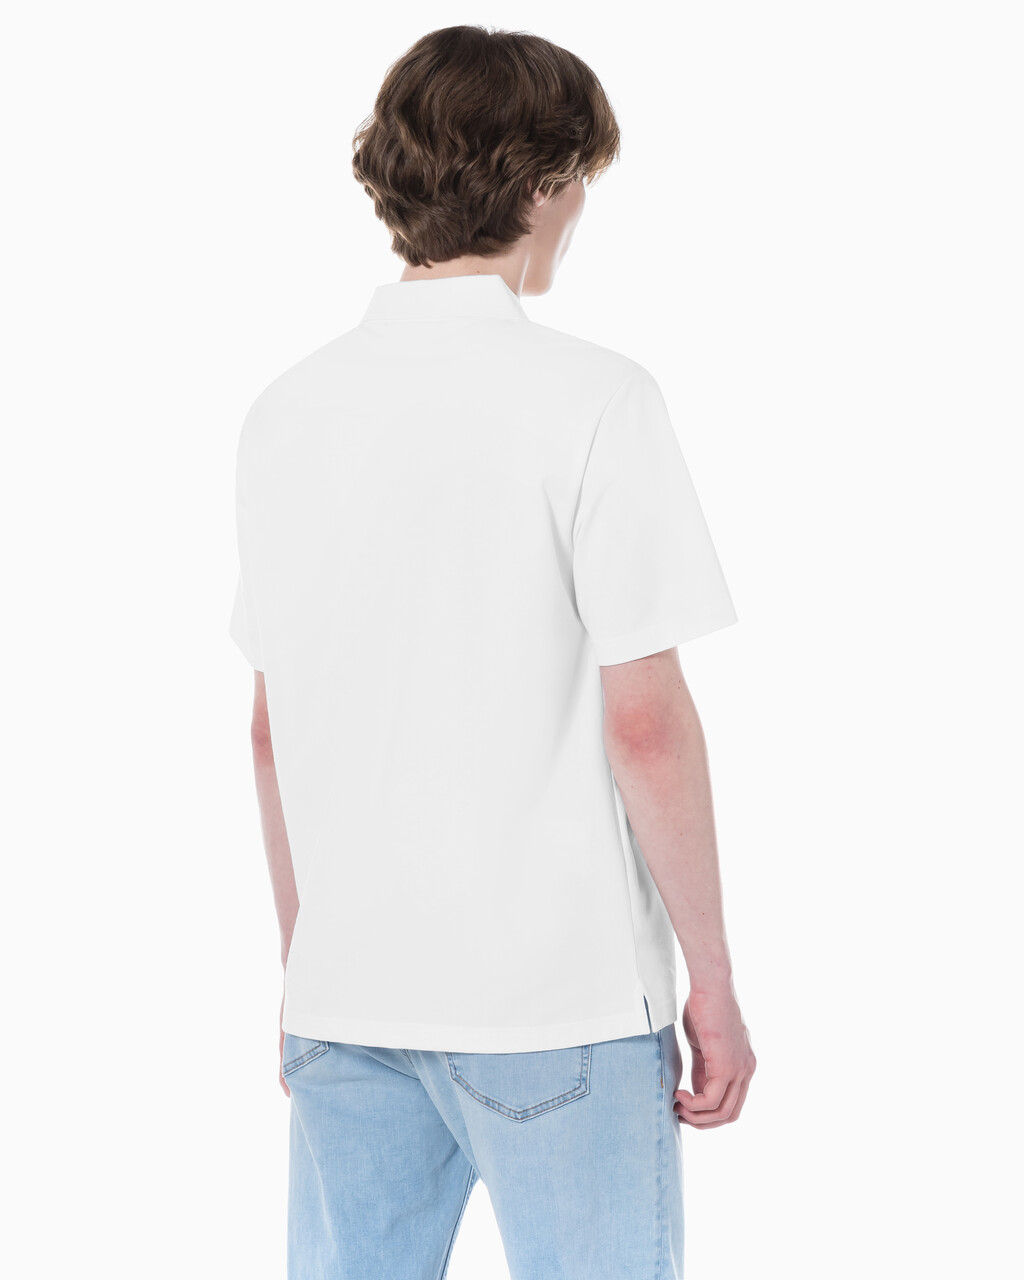 Buy 남성 릴렉스핏 피케 폴로 반팔 티셔츠 in color BRIGHT WHITE